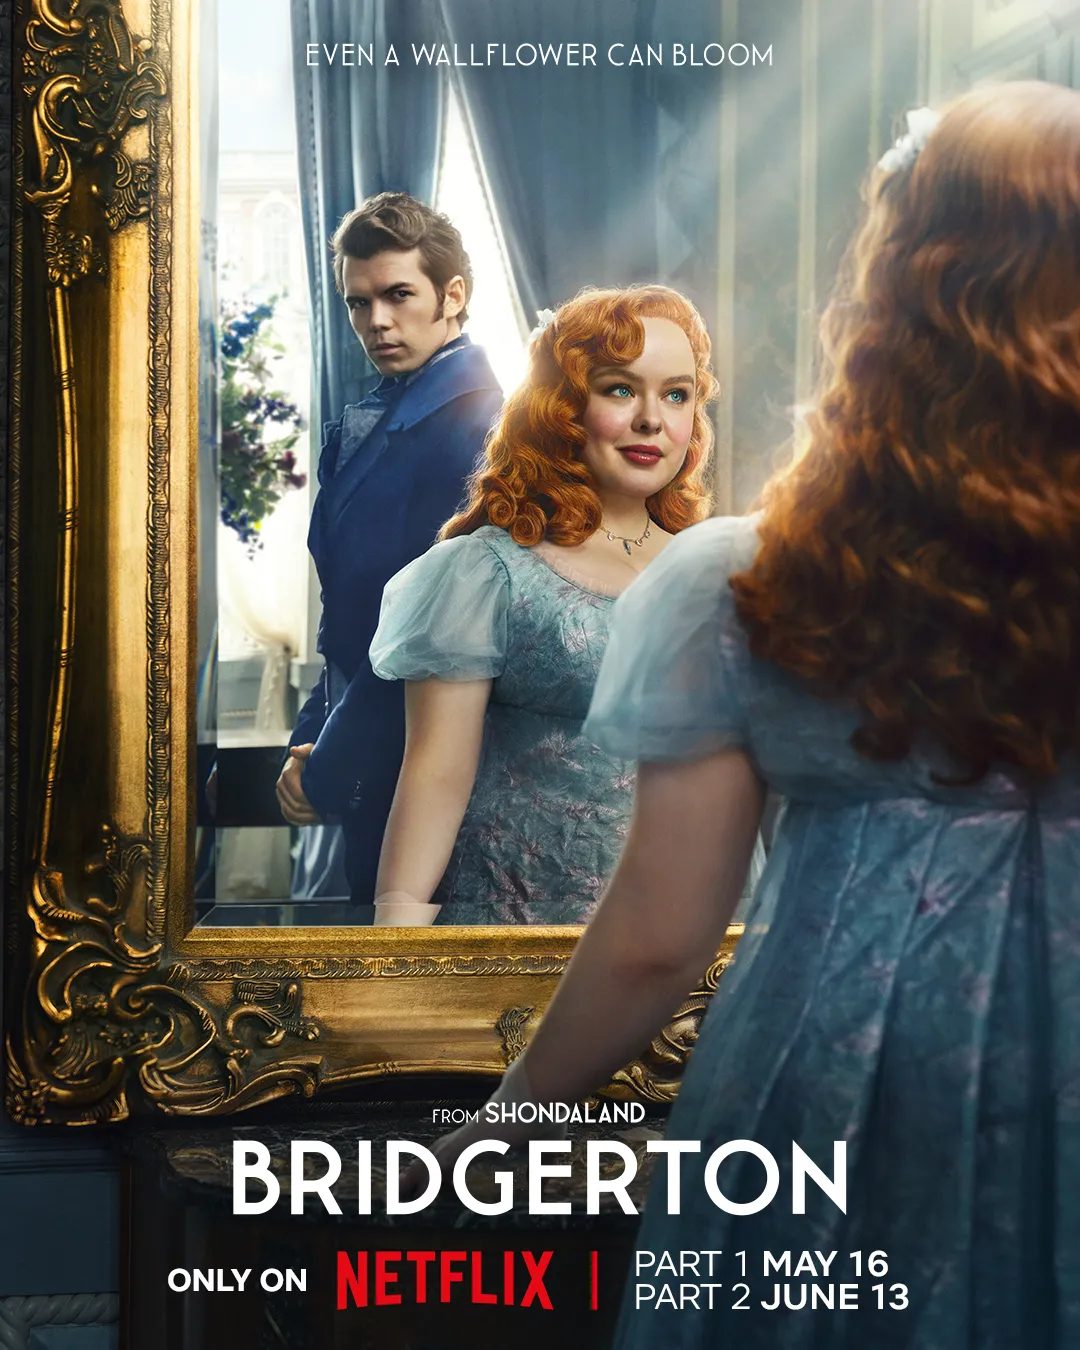 third season of Bridgerton